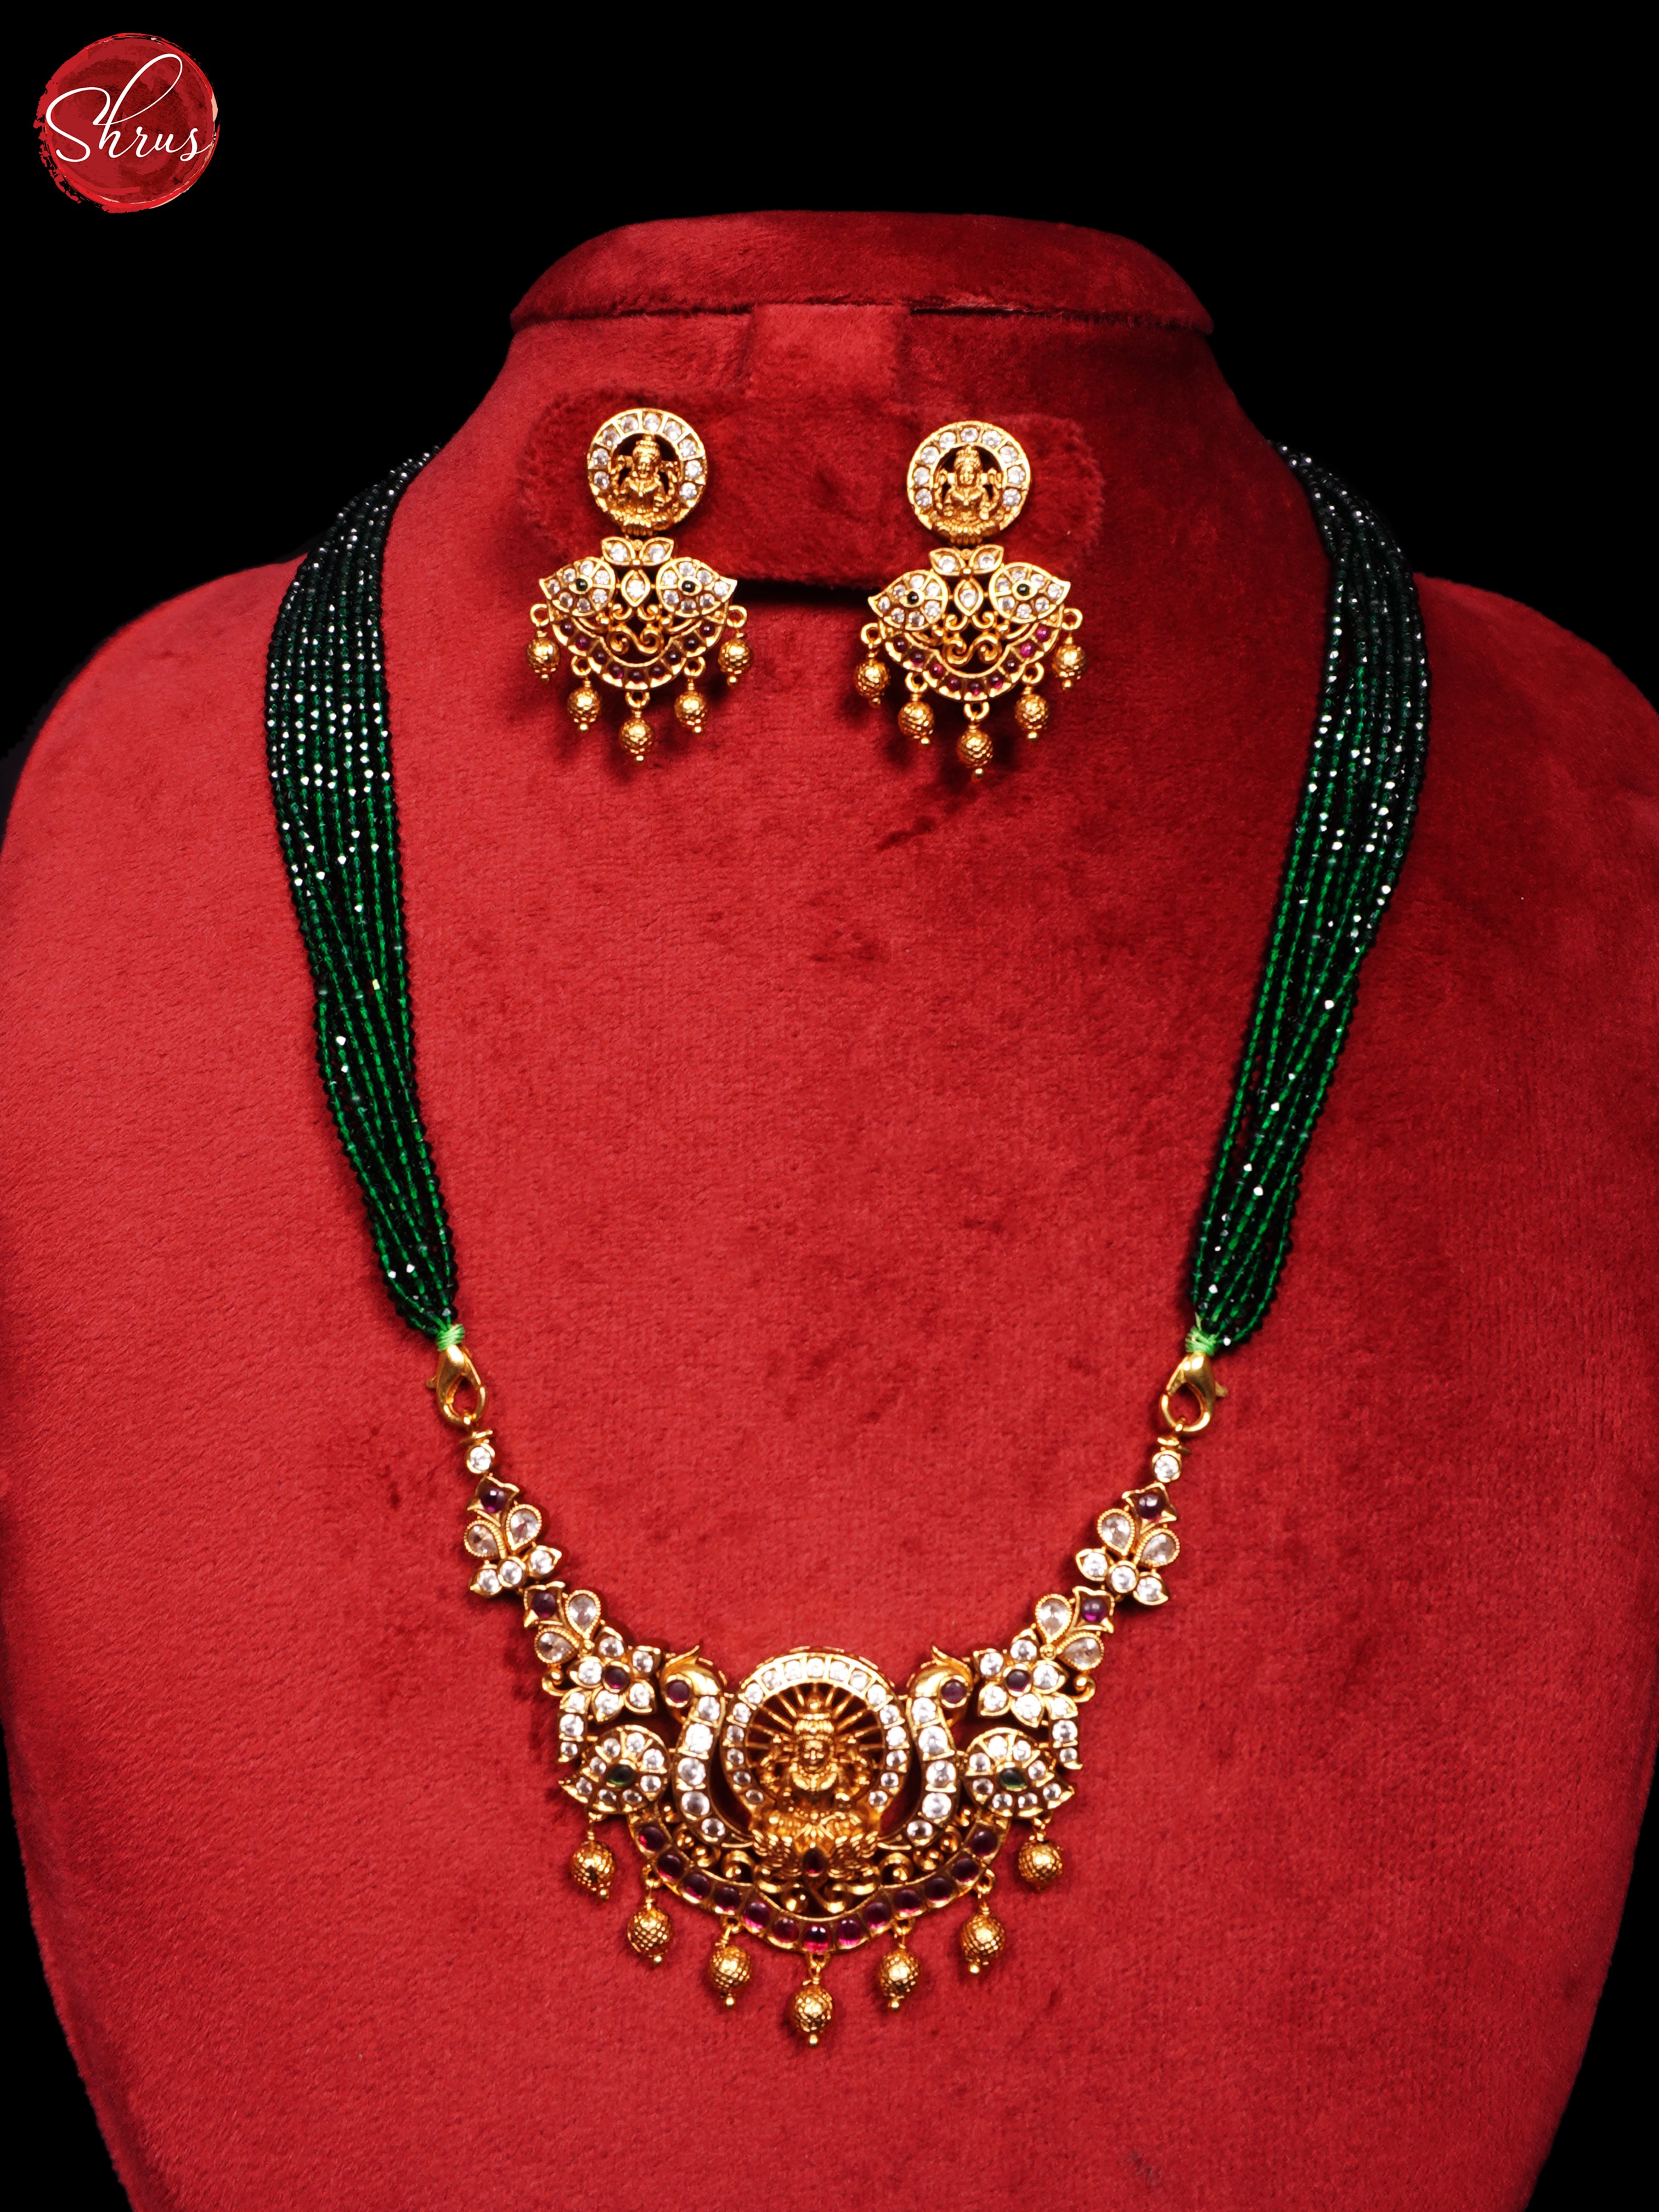 Gold Plated Lakshmi Pendant with Gren Crystal Mala- NECK PIECE & EARRINGS - Shop on ShrusEternity.com